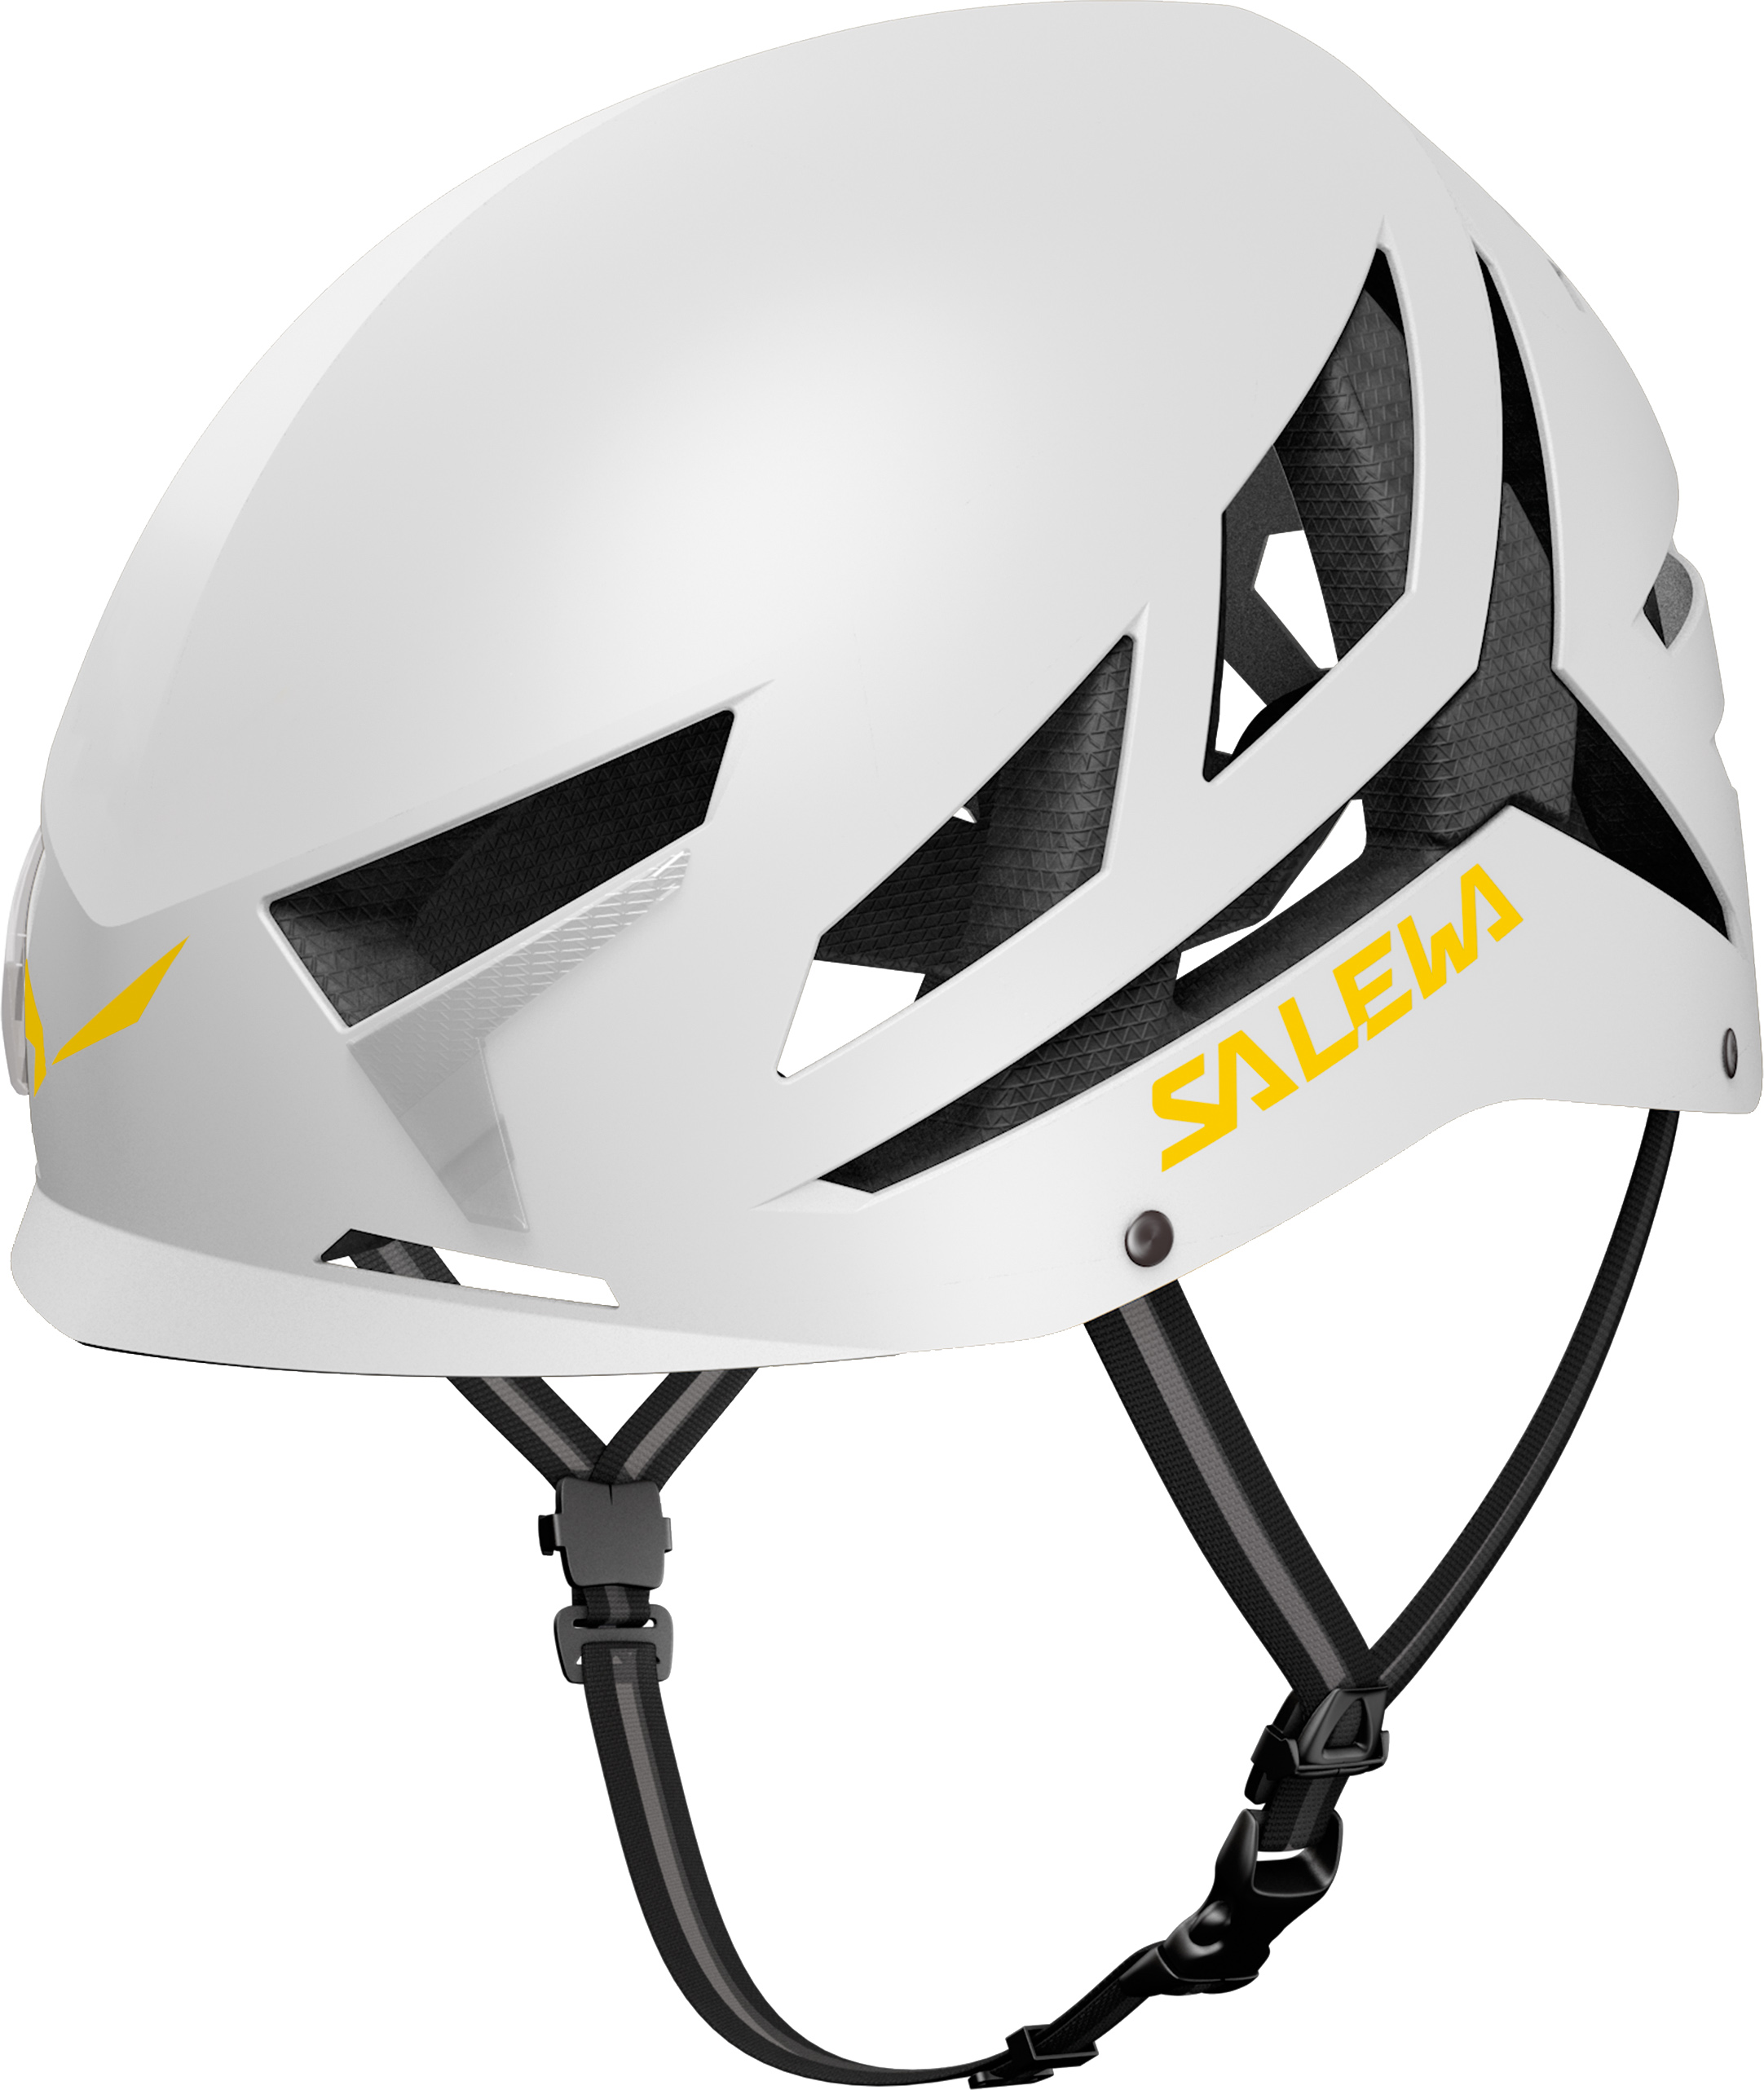 Salewa Vayu 2.0 Rock Climbing Helmet